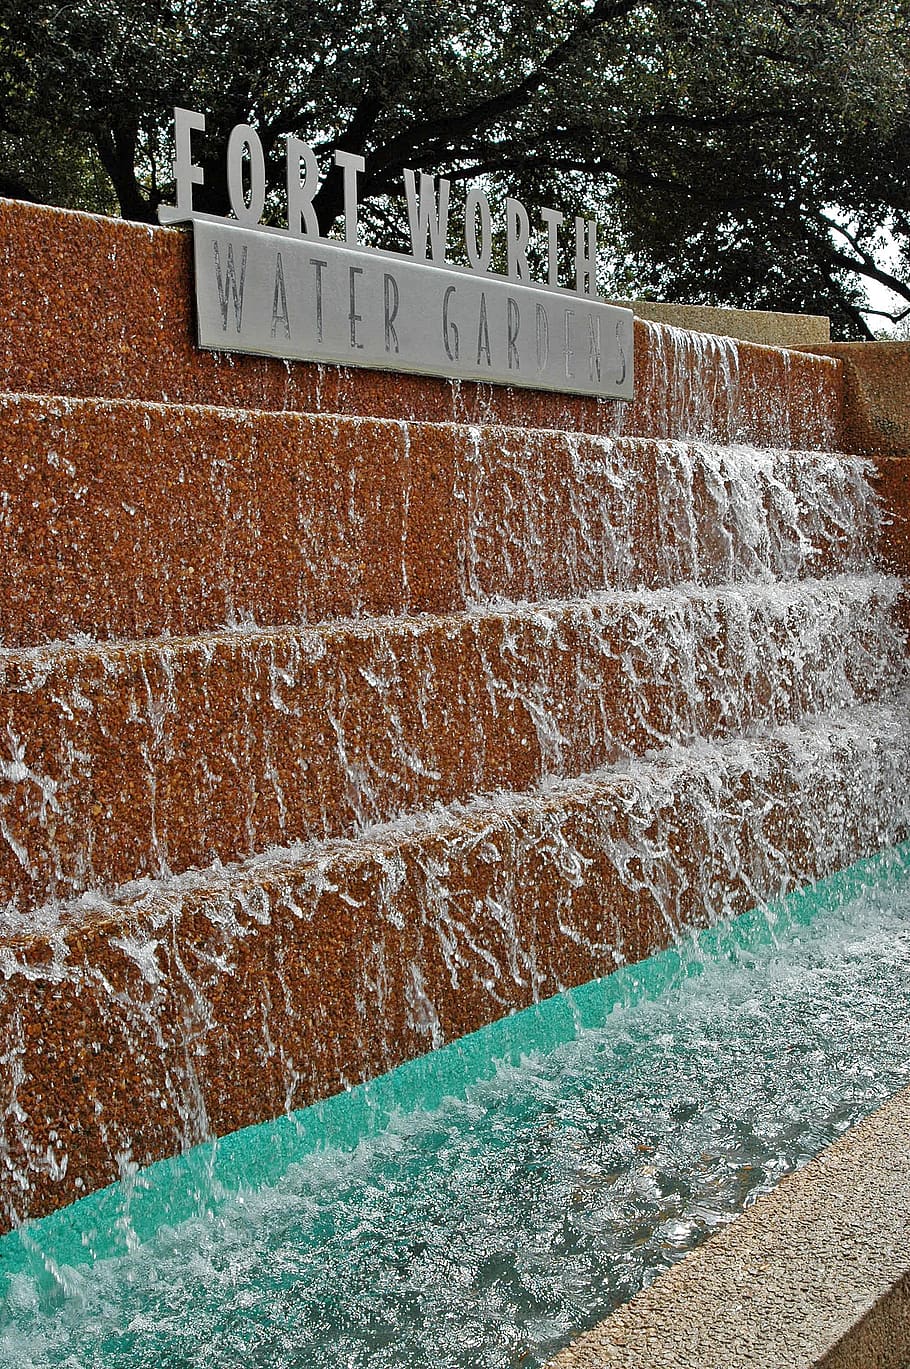 Hd Wallpaper Fort Worth Texas Water Gardens Fountain Spray